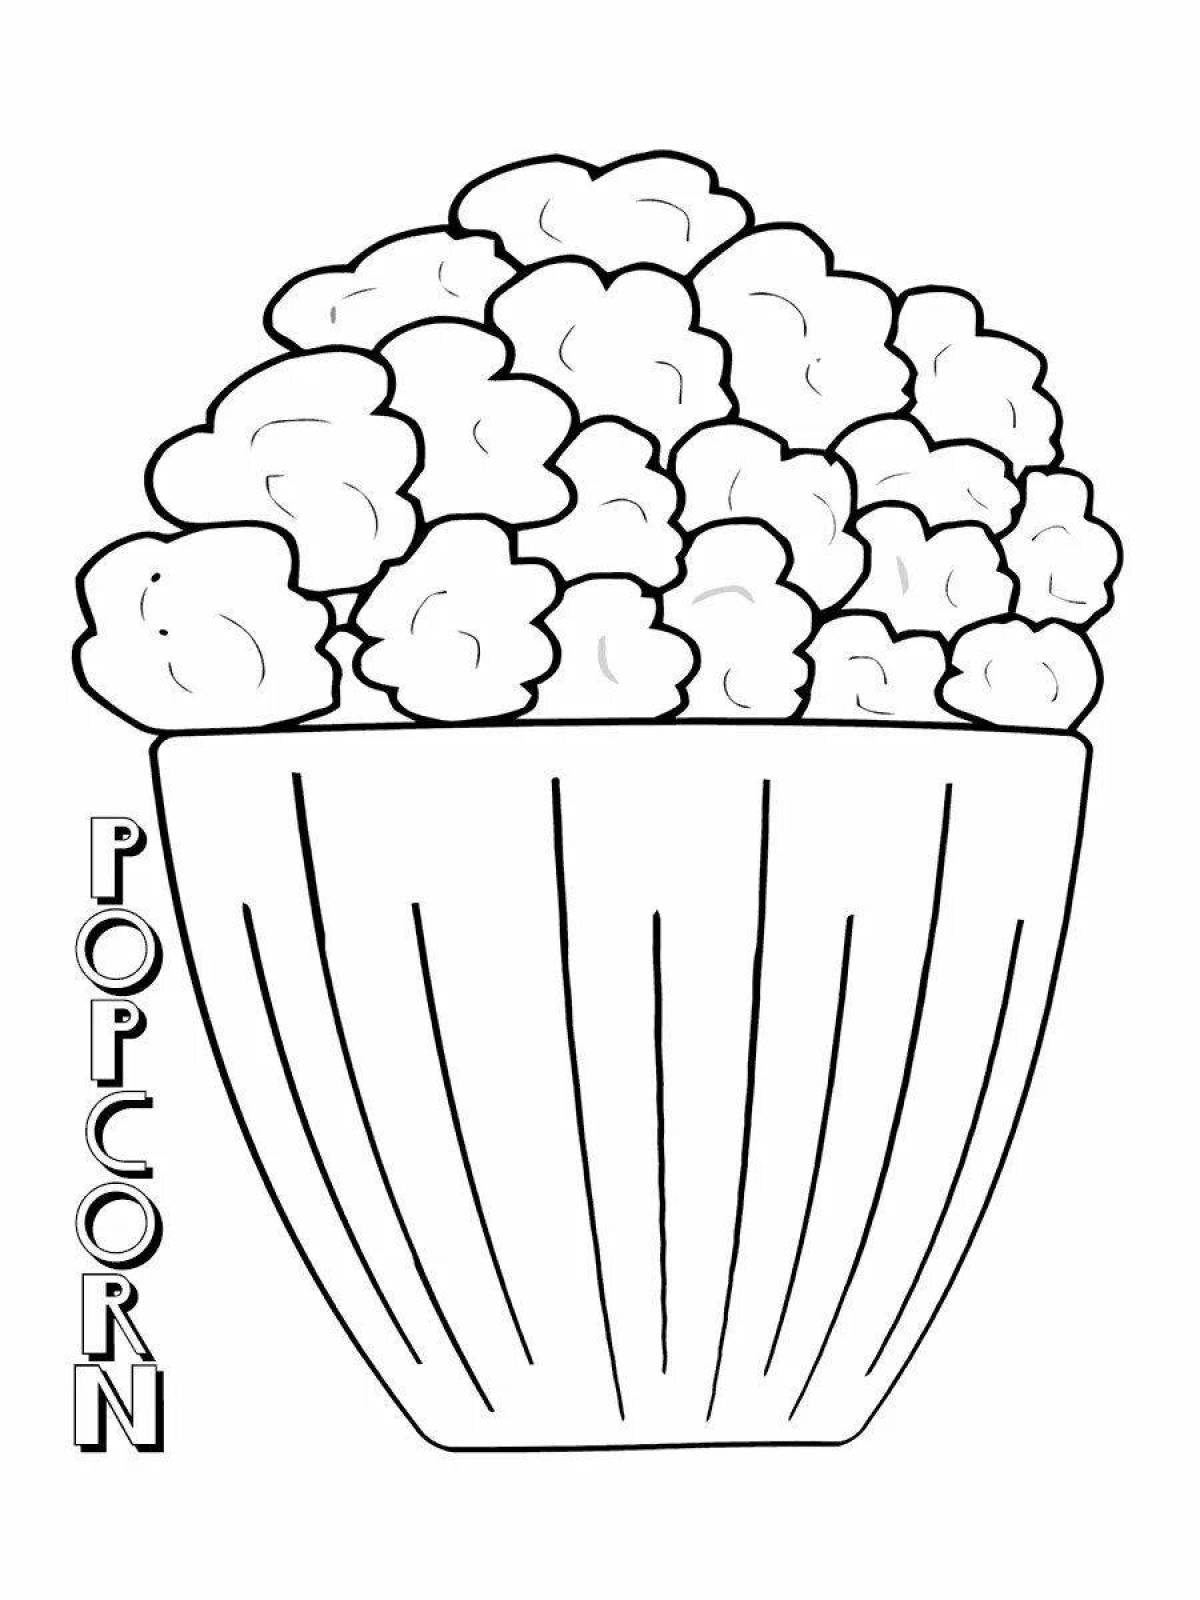 Delightful popcorn coloring book for kids